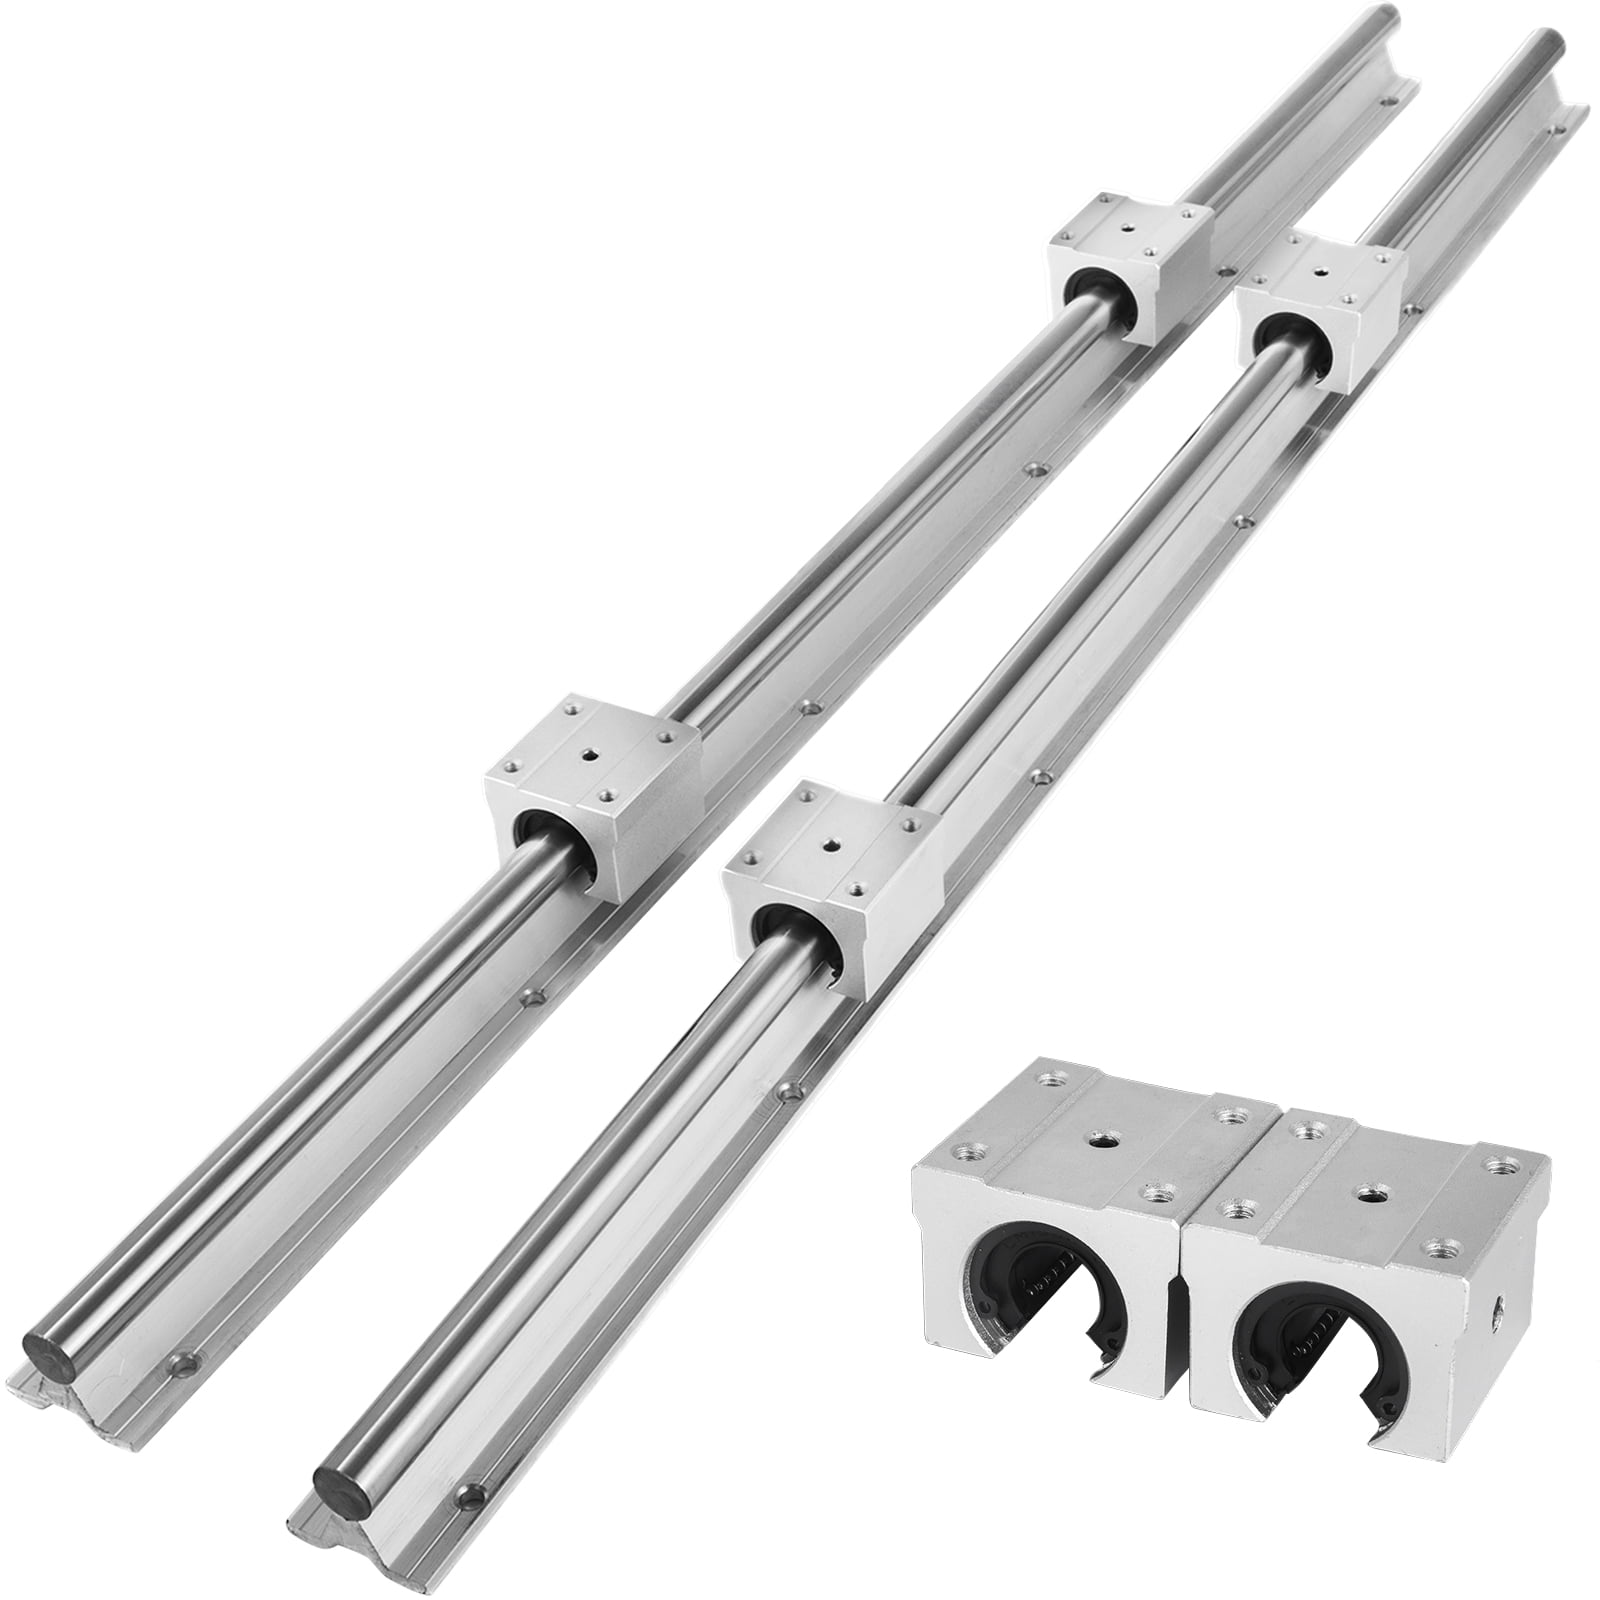 CNBTR 400mm Length Bearing Steel Linear Sliding Guide Slide Rail & 2PCS MGN15 Linear Extension Block 